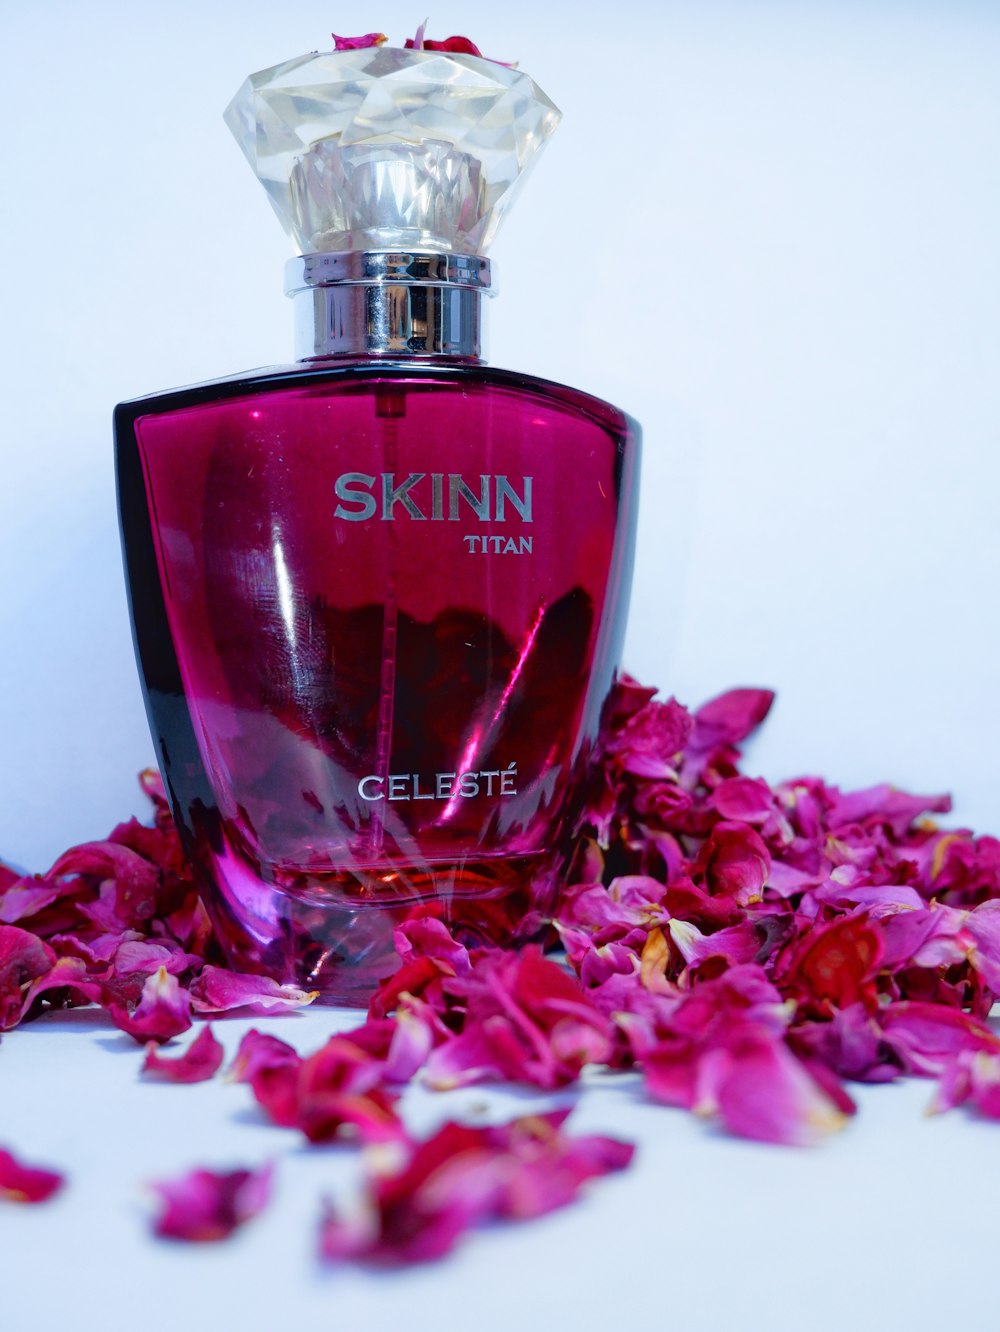 a bottle of skin titan gelette surrounded by flowers